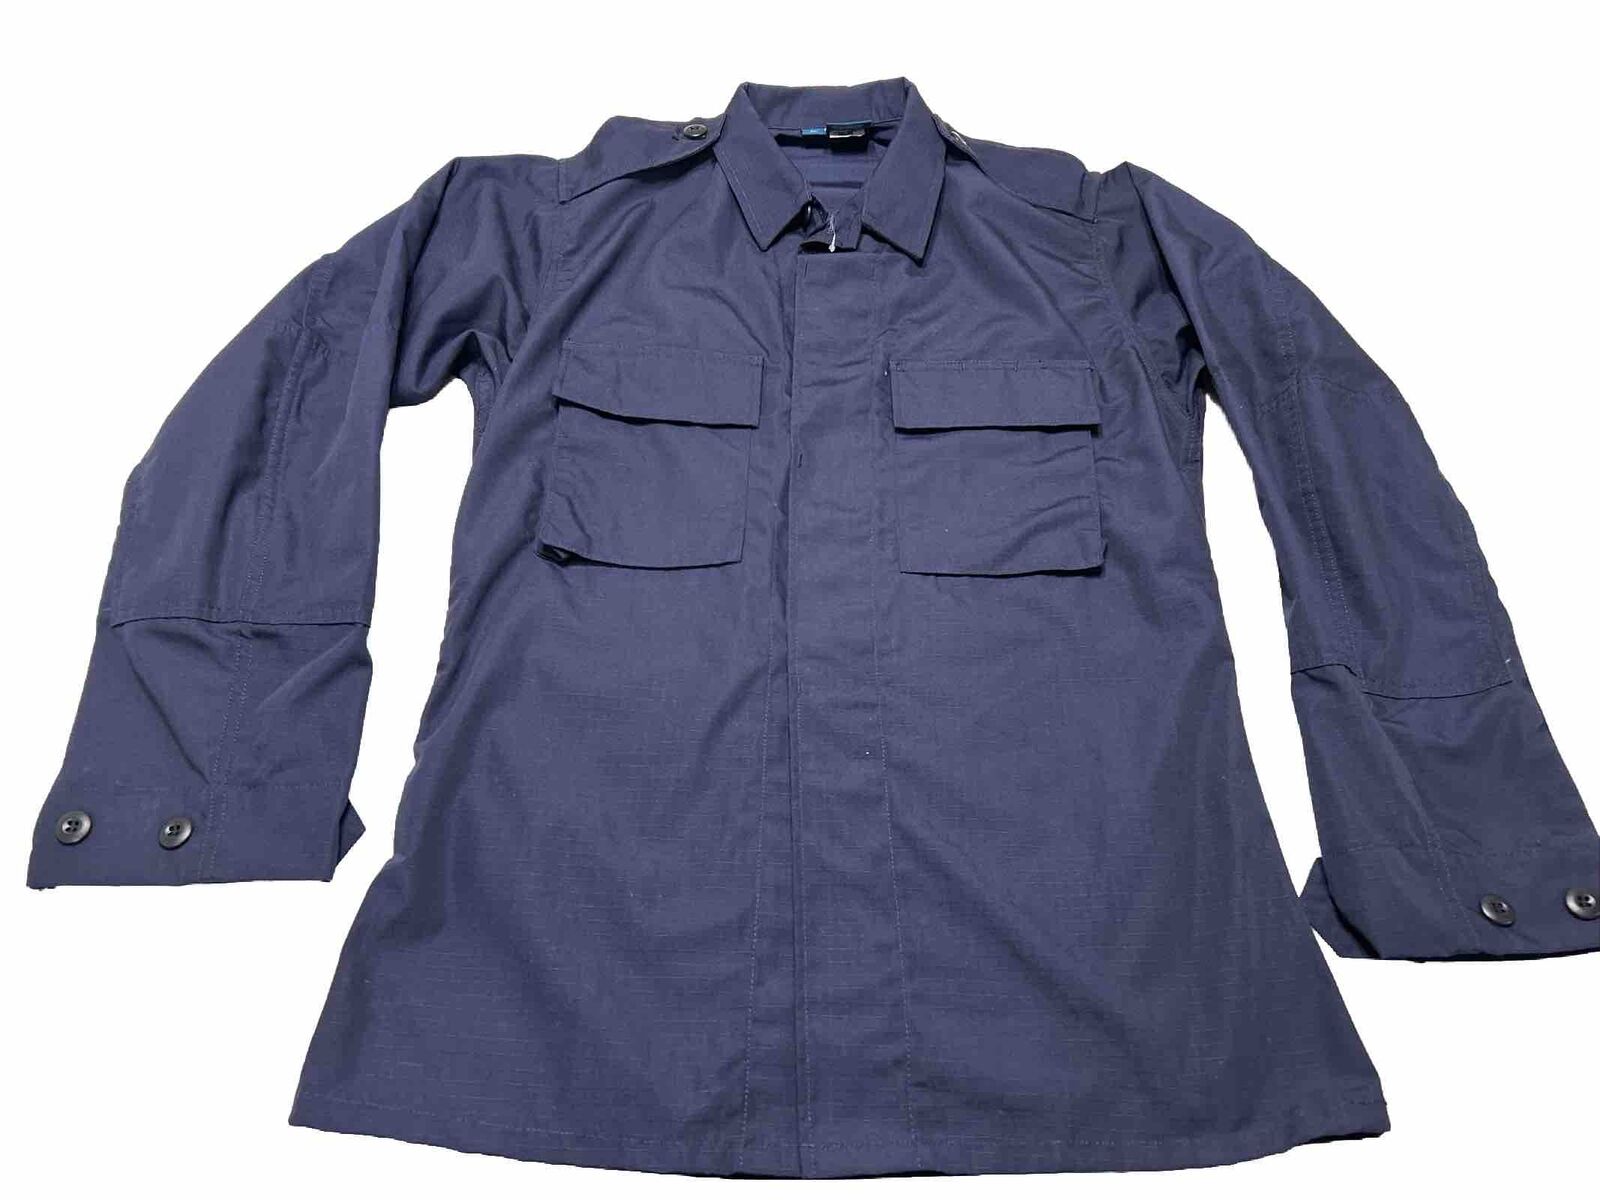 Propper BDU Military Tactical Uniform Men’s Coat Blouse Size S/L New With Tags